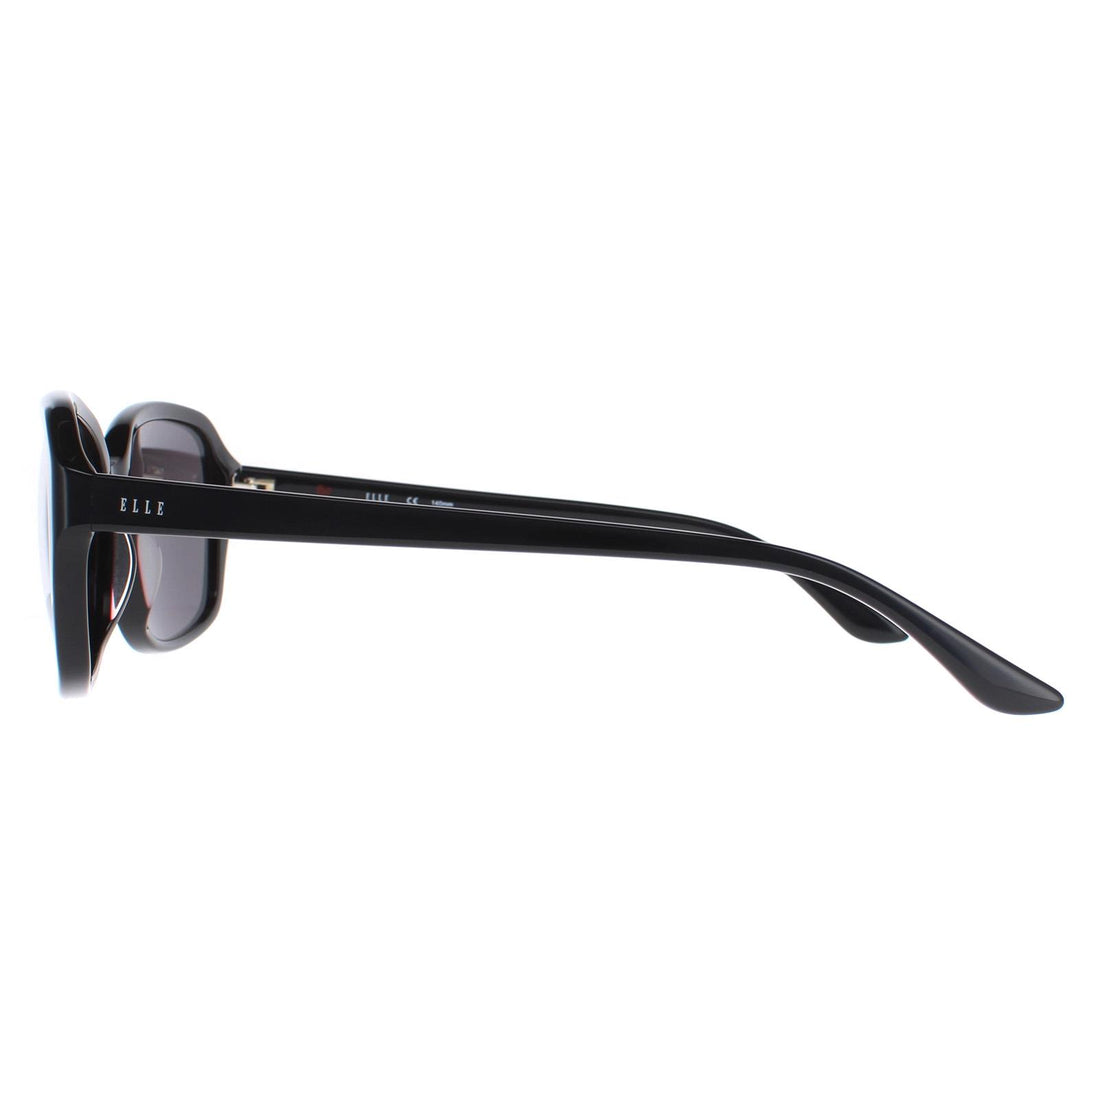 Elle Sunglasses 14905 BK Black Grey